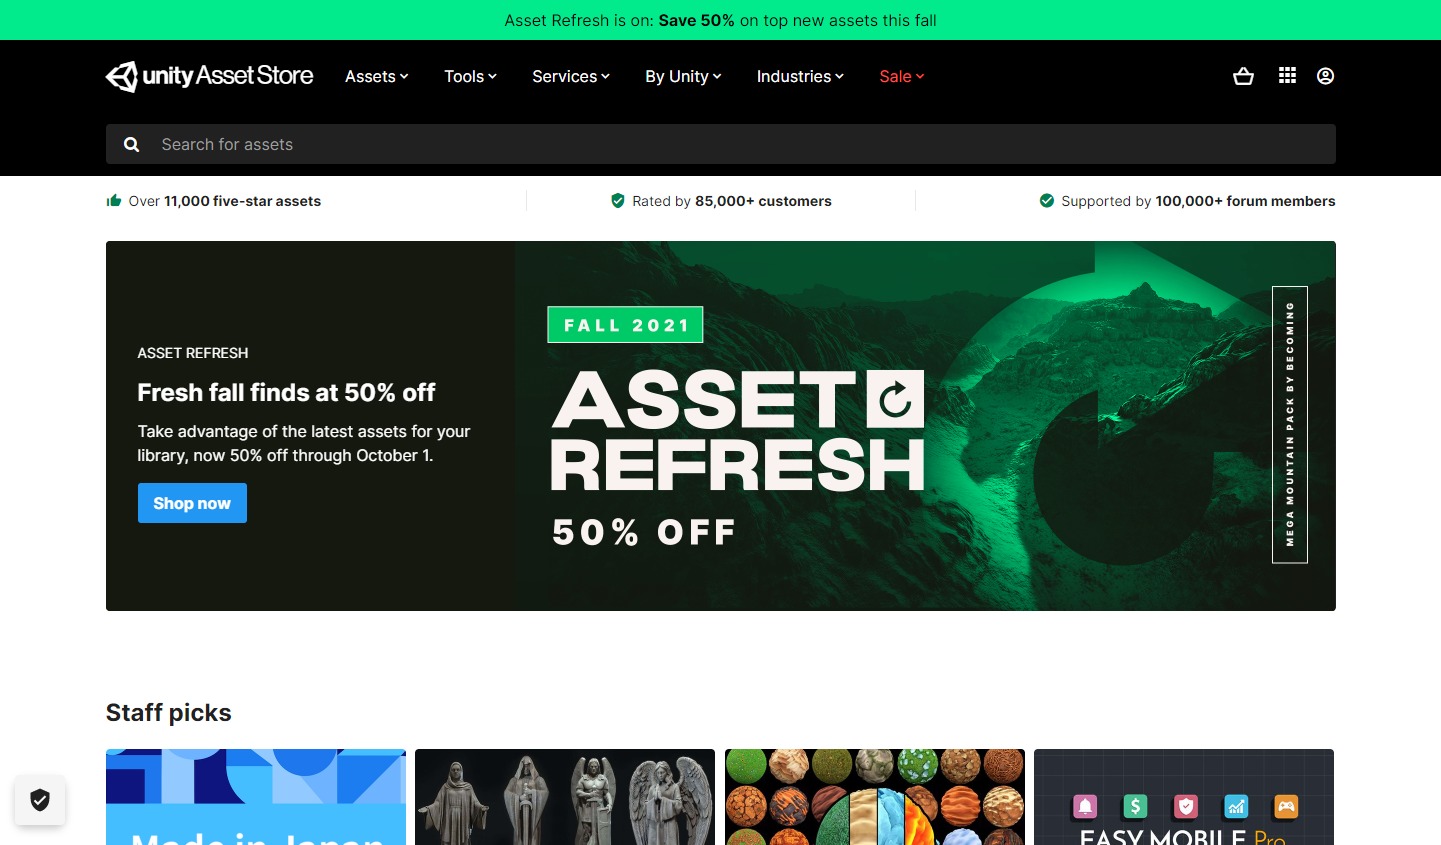 Unity AssetStore